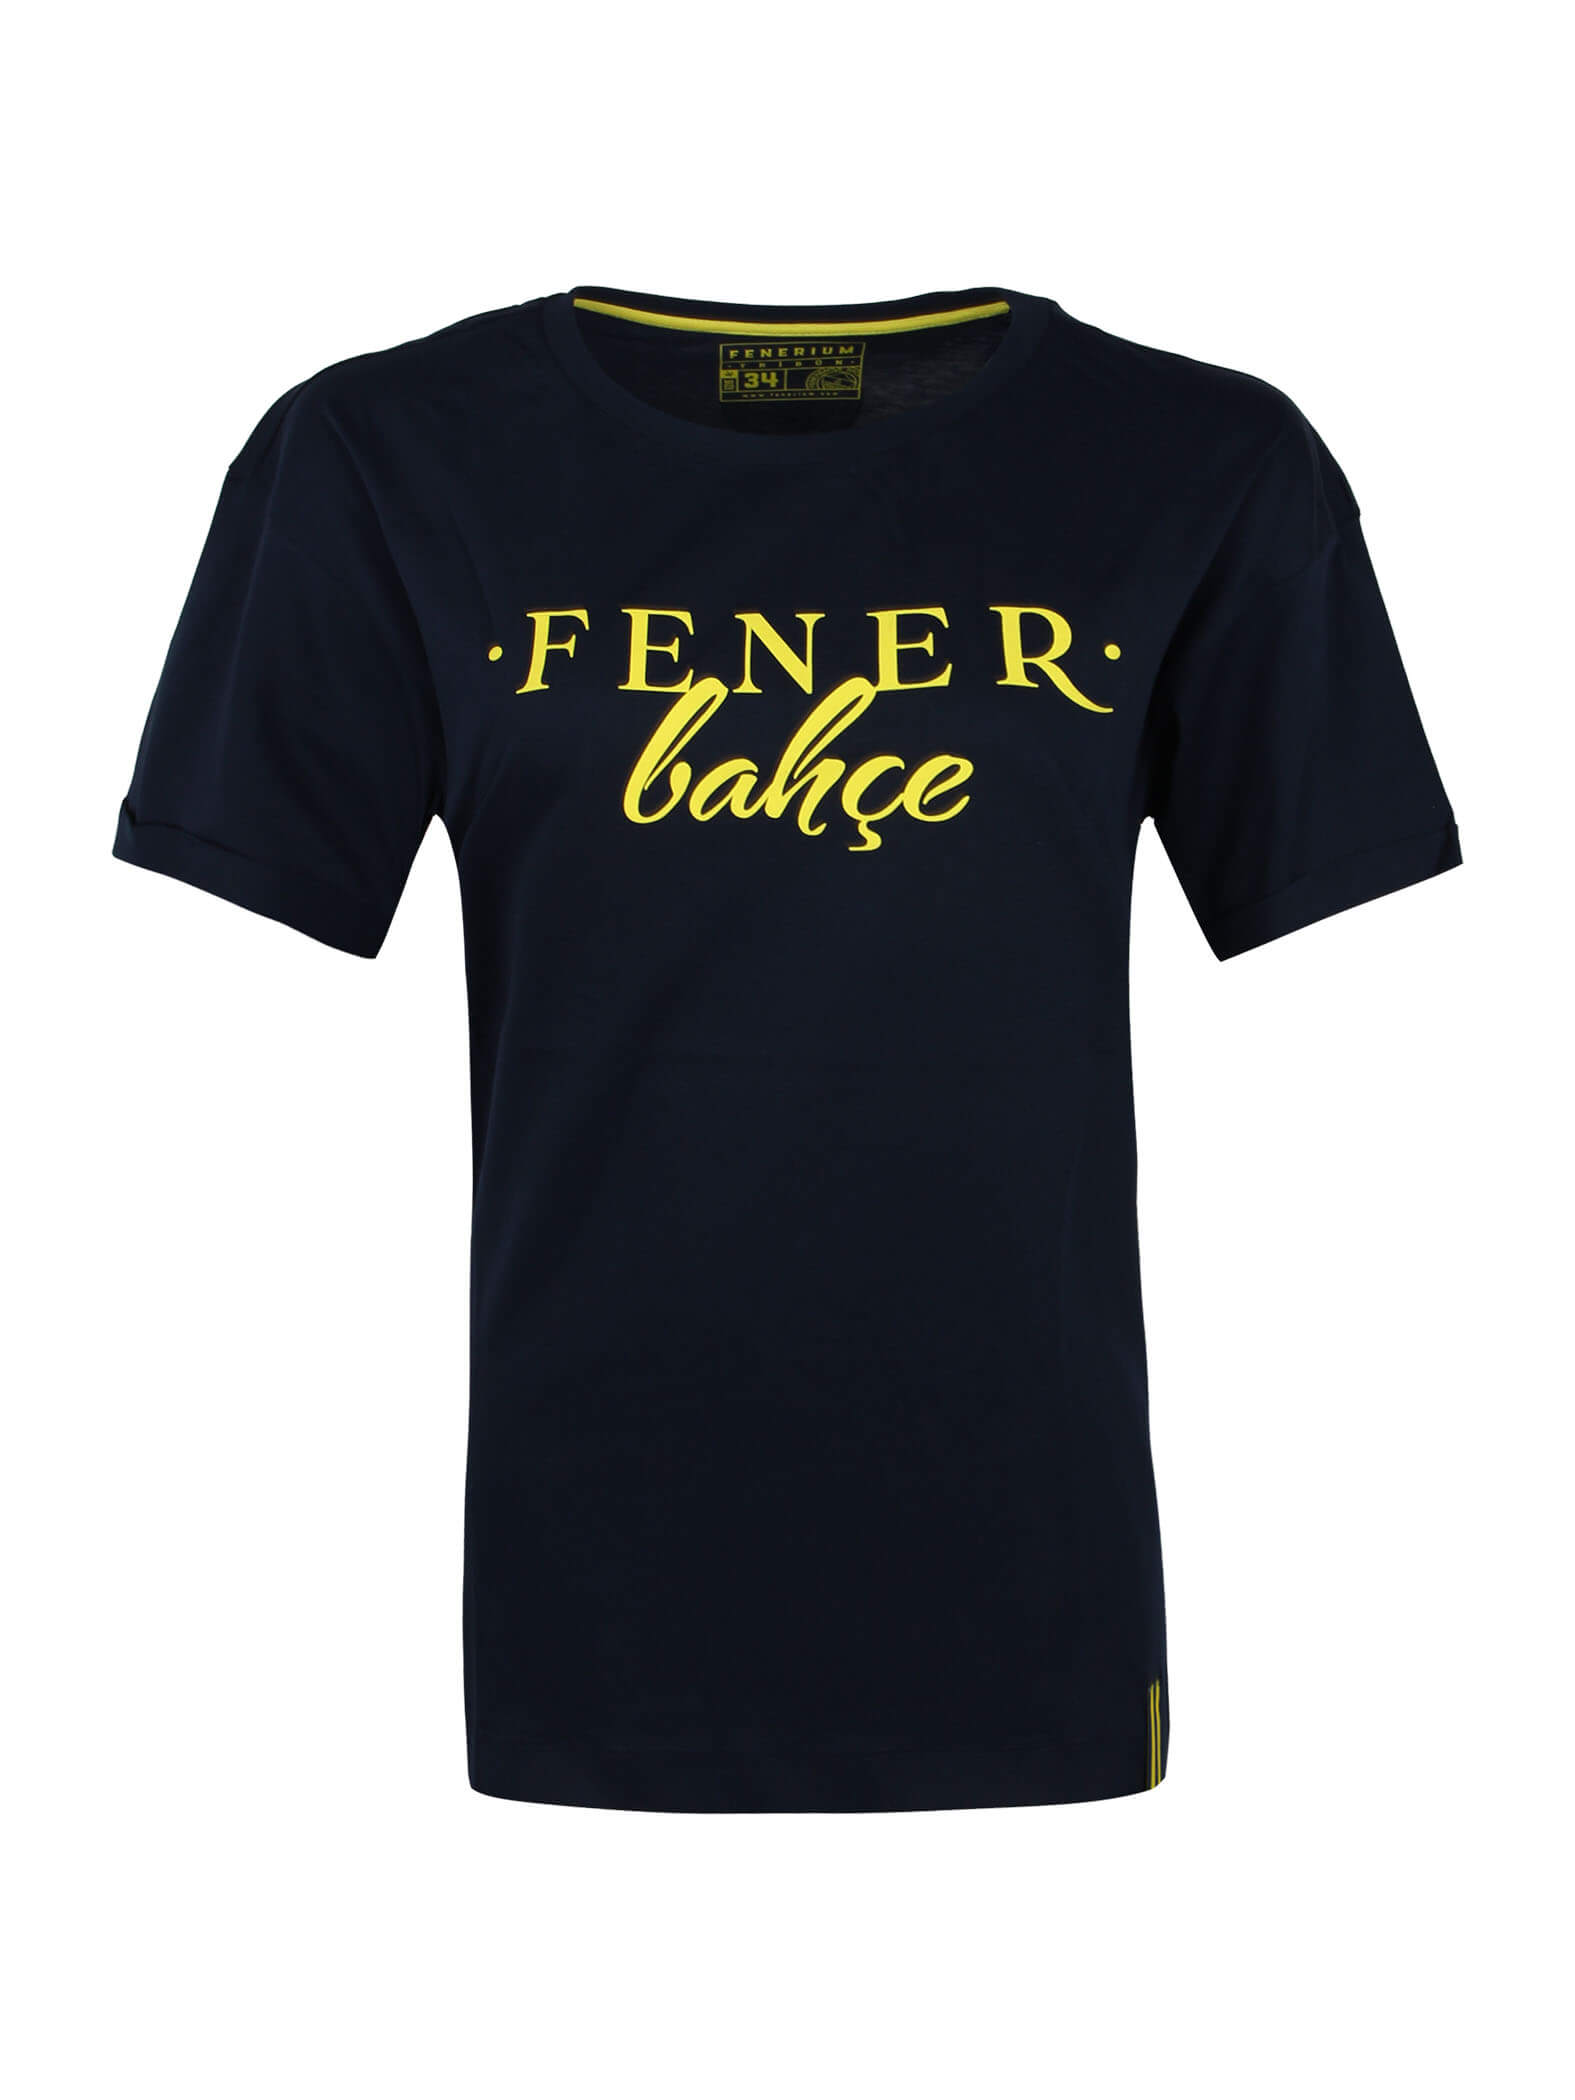 Fenerbahçe Women's Navy Blue Tribune Tshirt